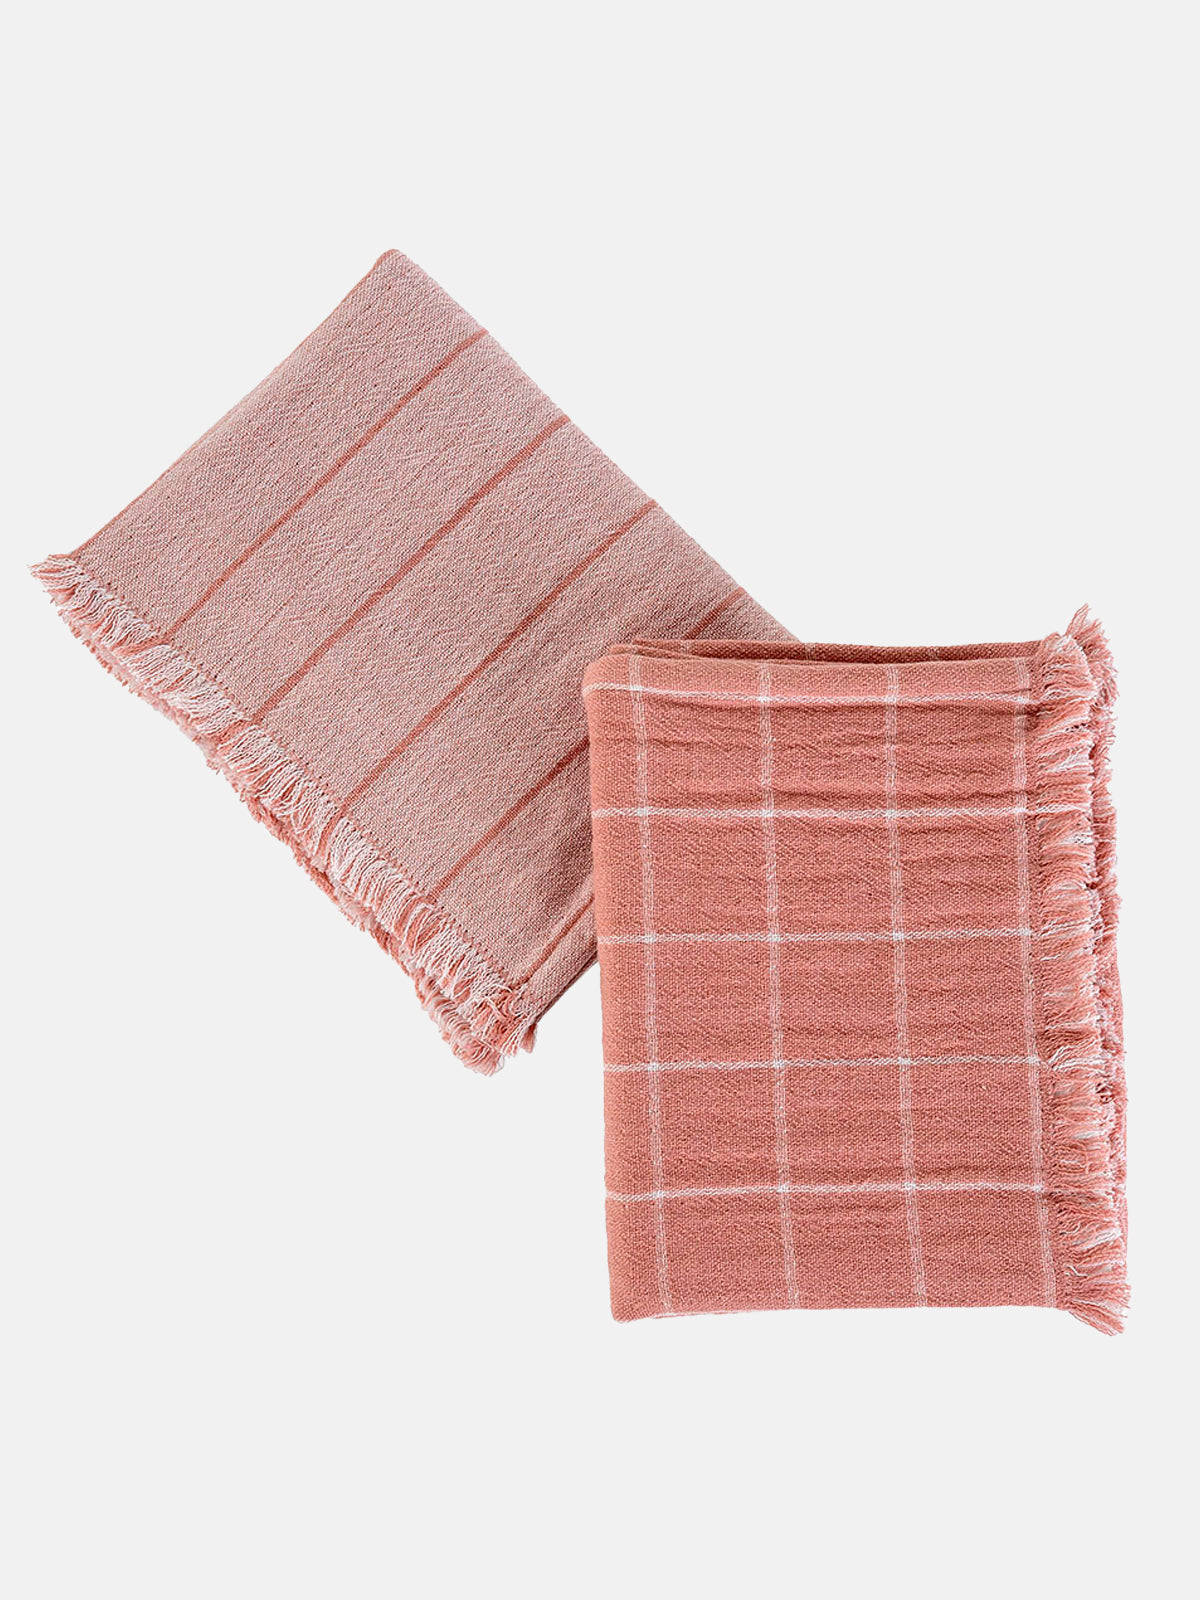 Pale Pink Linen Tea Towel Thick and Durable Kitchen Towel Cotton